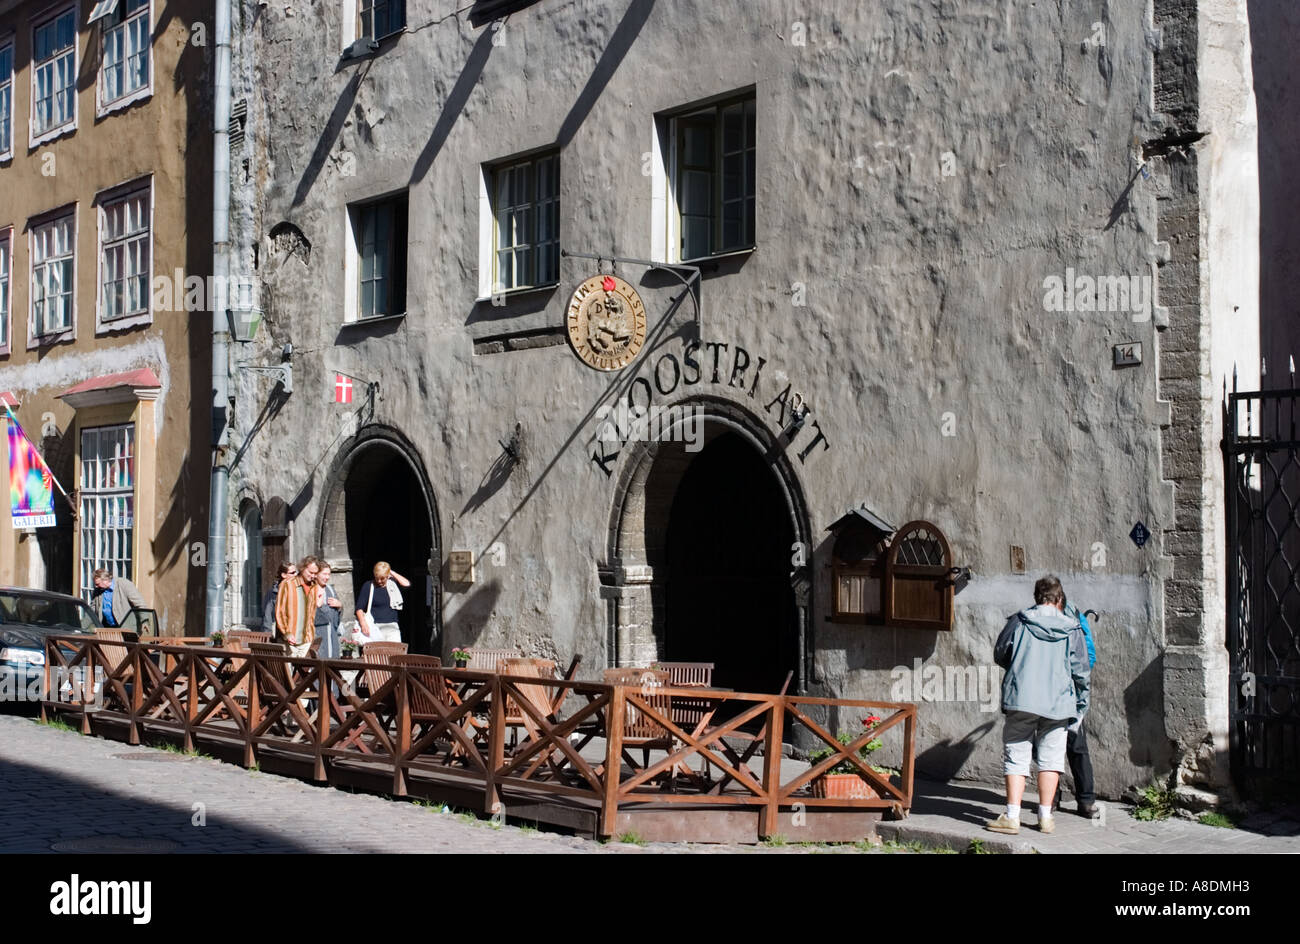 Kloostri Ait restaurant and entrance to Dominican Monastery Vene Street Tallinn Estonia Stock Photo